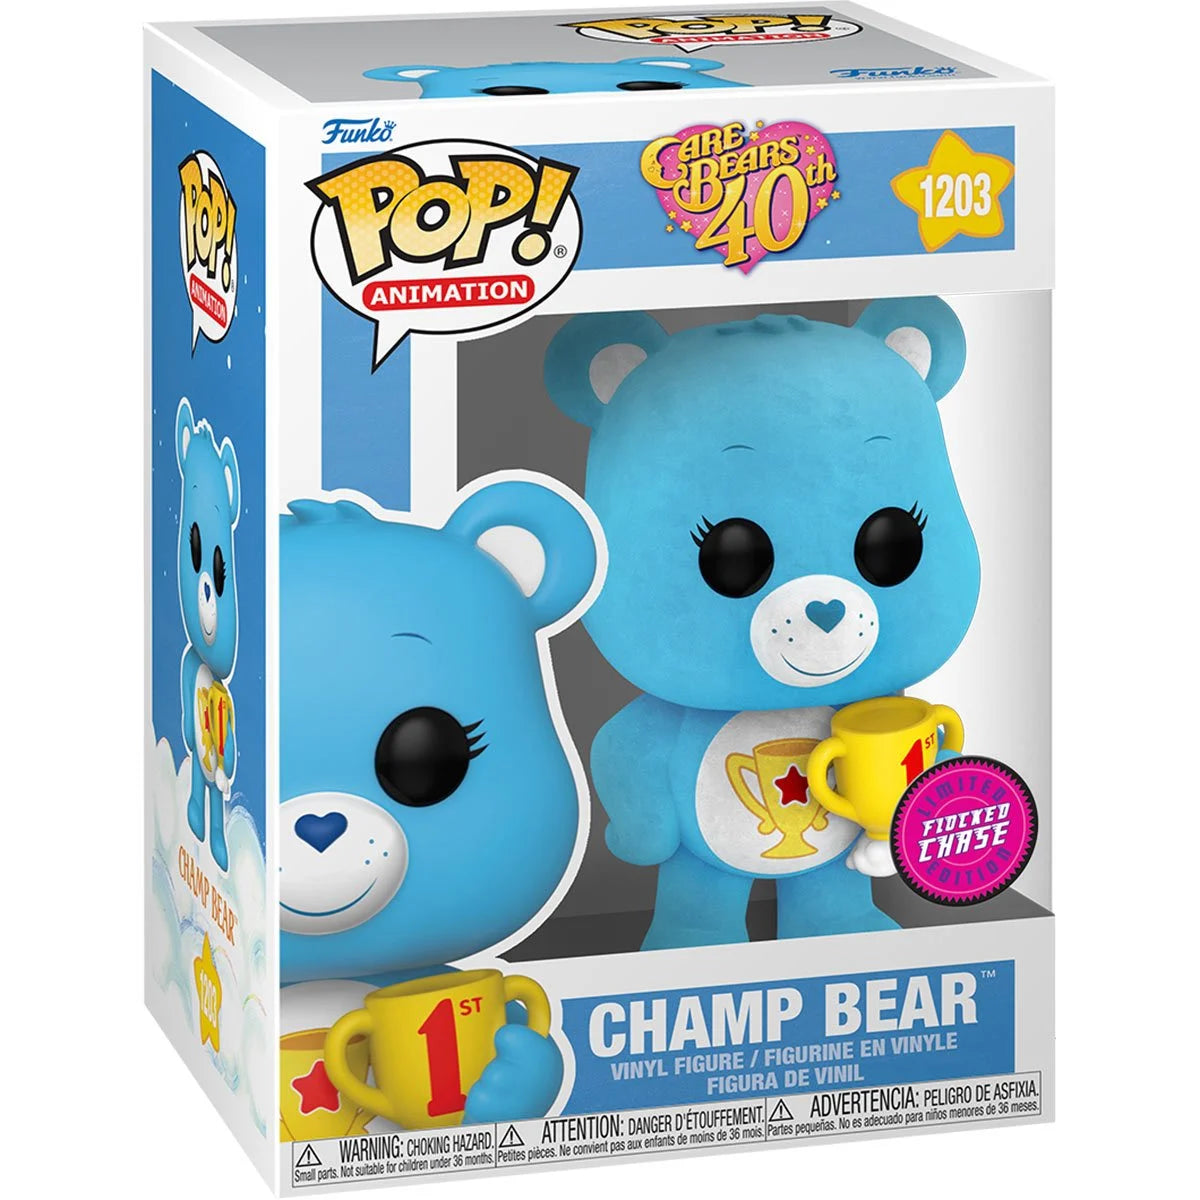 Champ Bear Care Bears 40th Anniversary FUNKO POP! ANIMATION